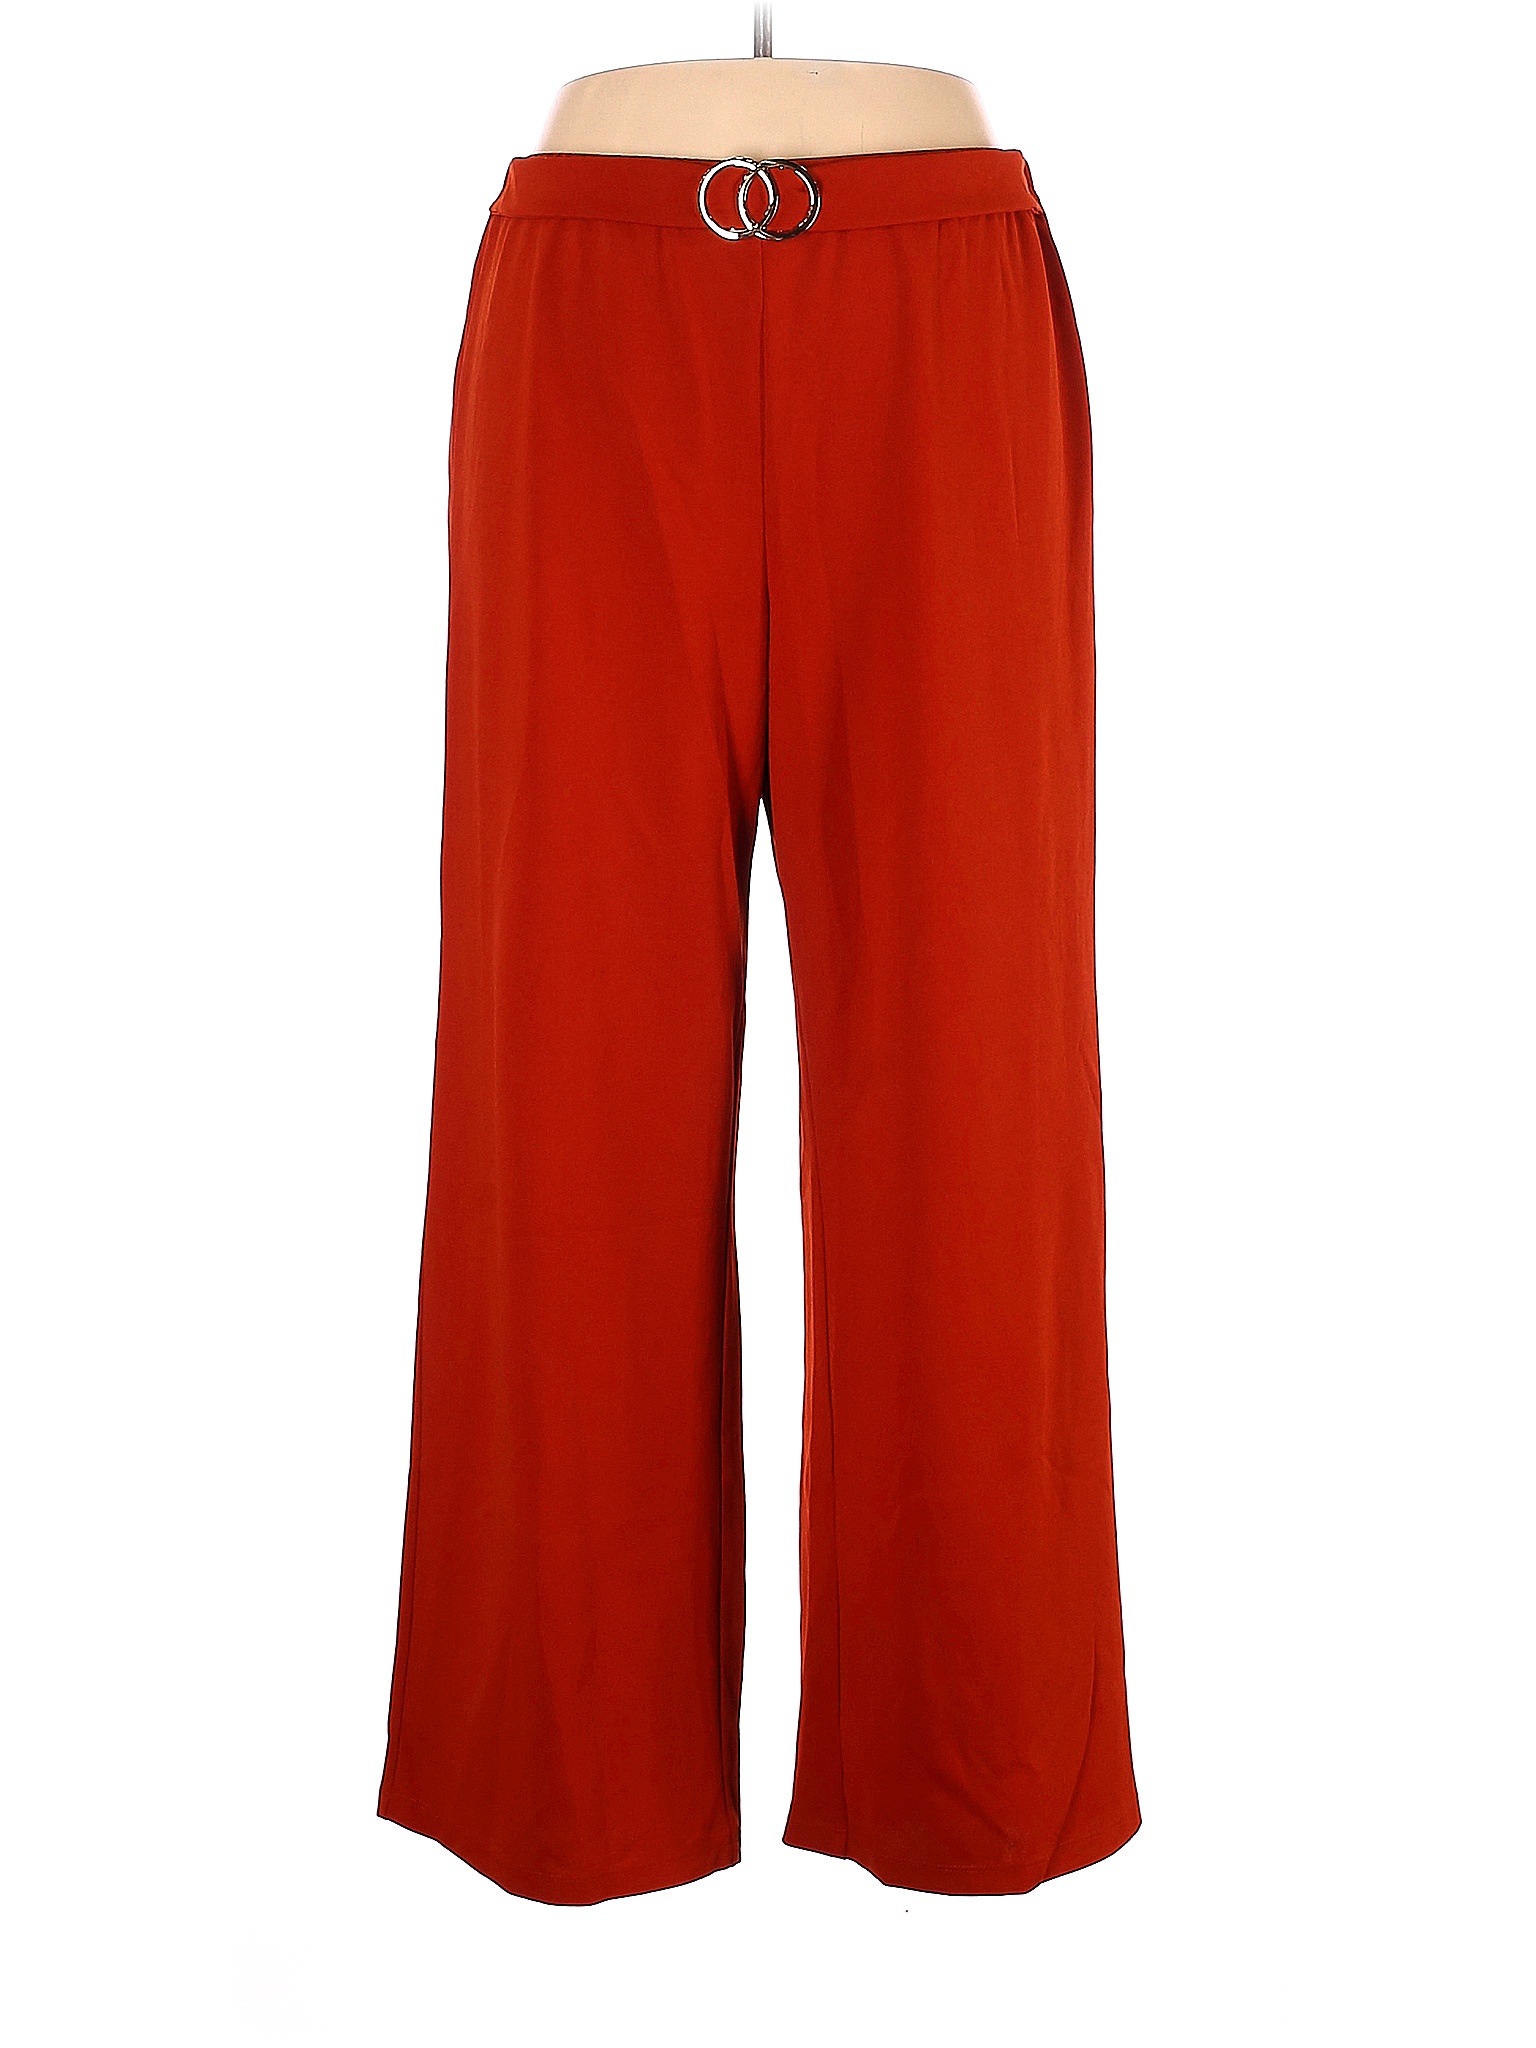 C established 1946 Solid Colored Orange Casual Pants Size 14 - 16 - 60% ...